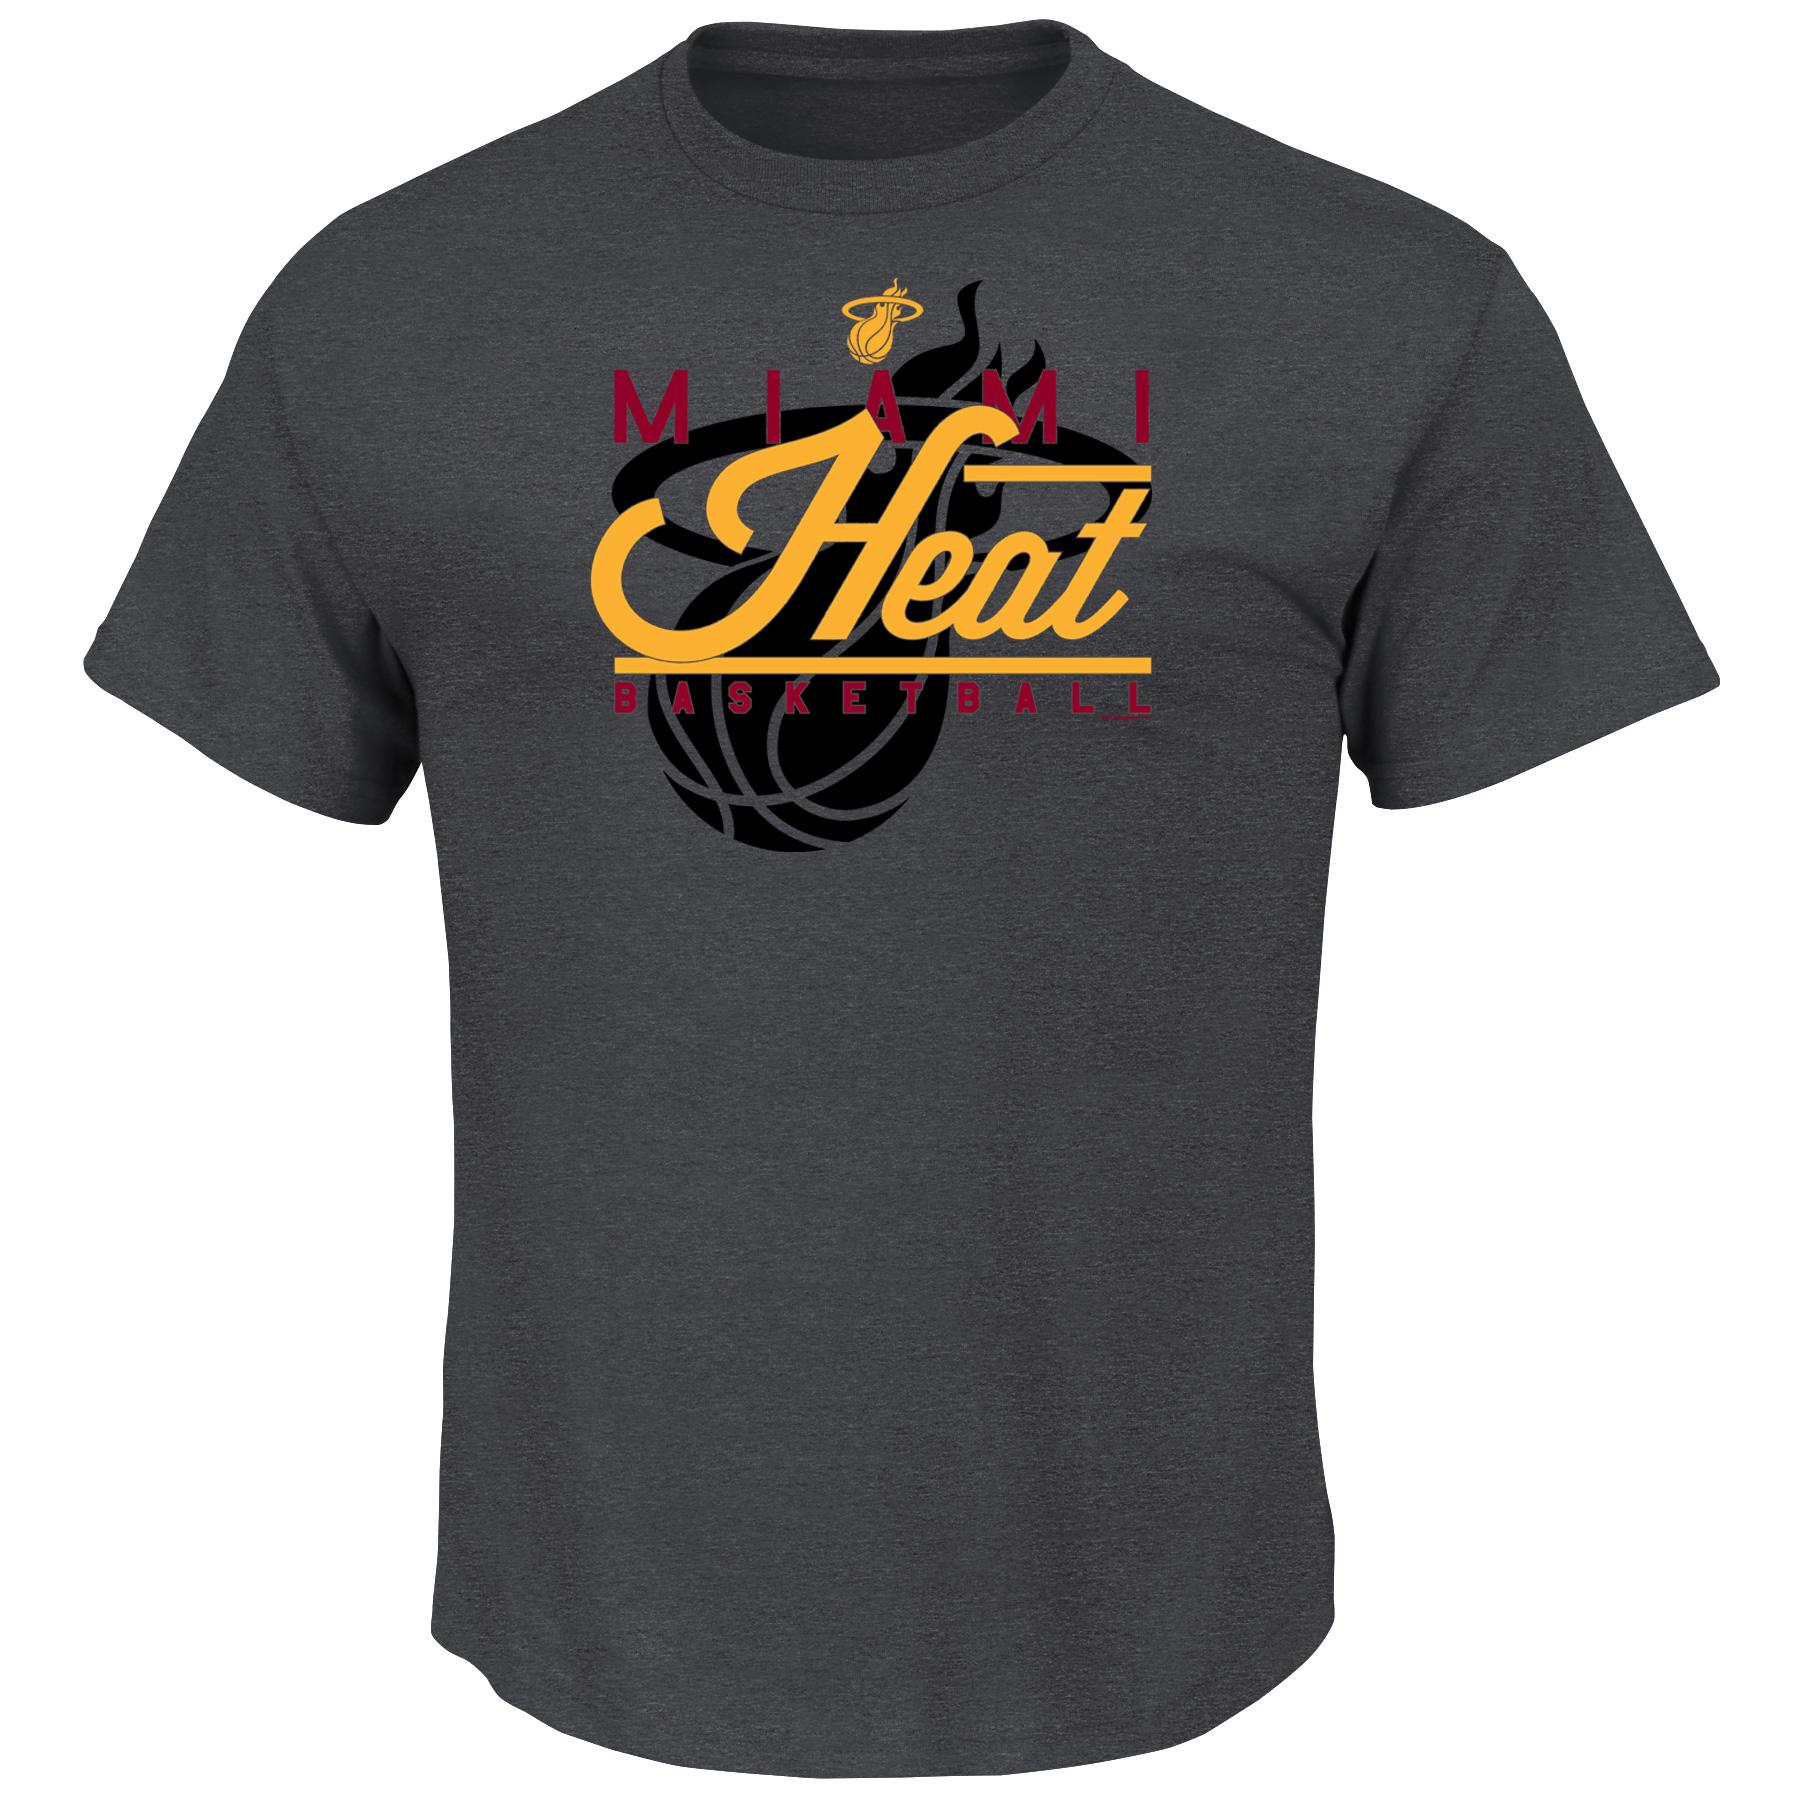 NBA(CANONICAL) Men's Gray Graphic T-Shirt - Miami Heat